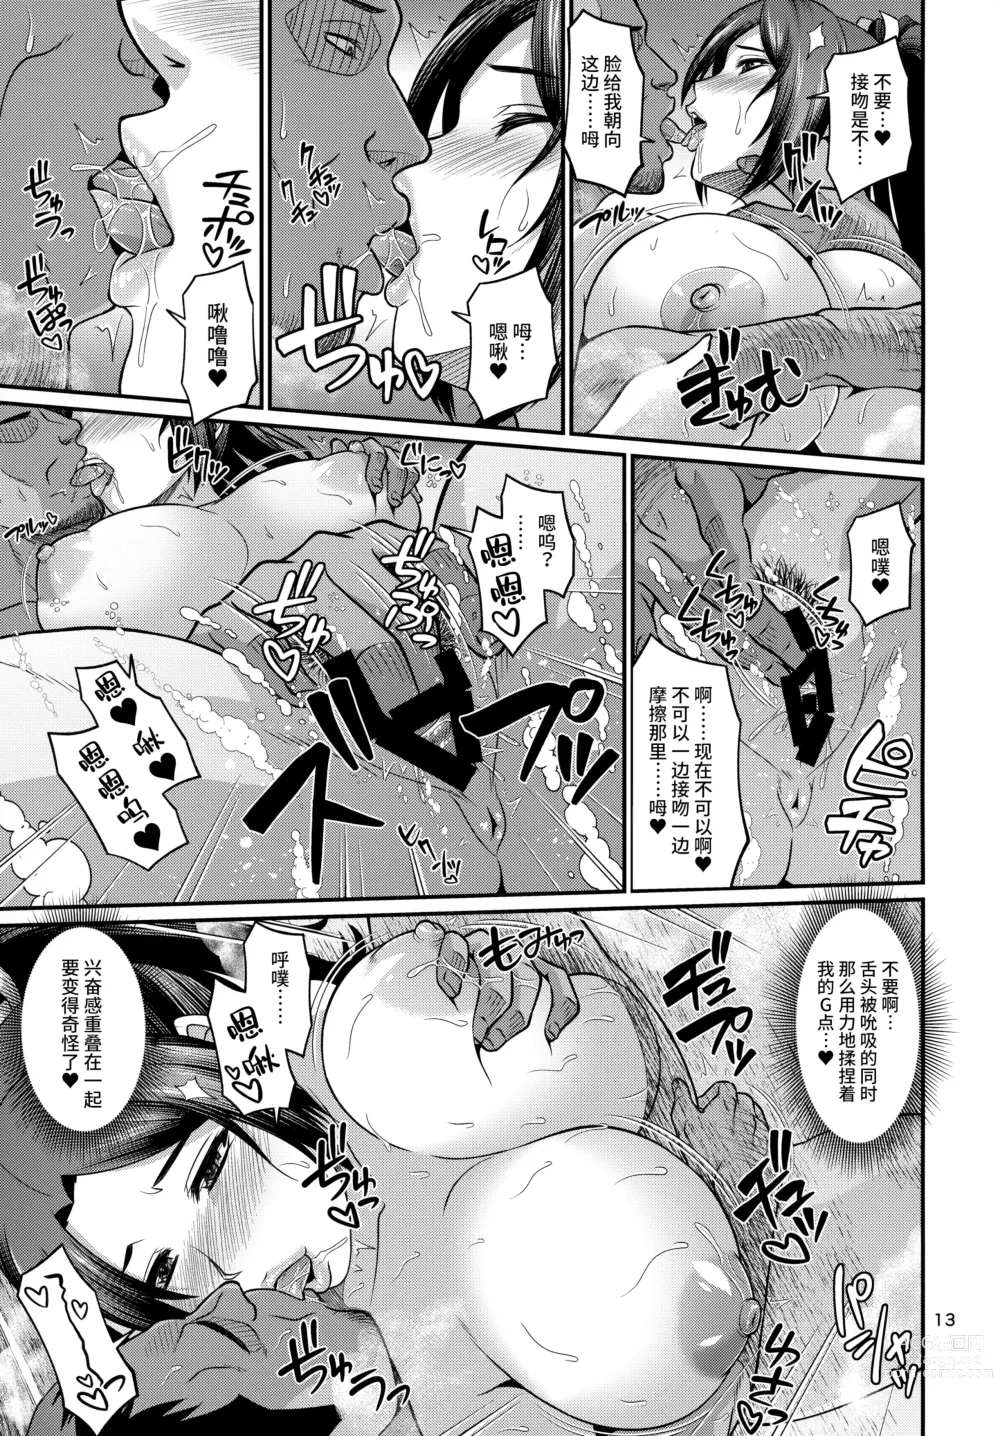 Page 13 of doujinshi Shiranui-ryuu Kunoichi VIP Gentei Nakadashi Onsen Date